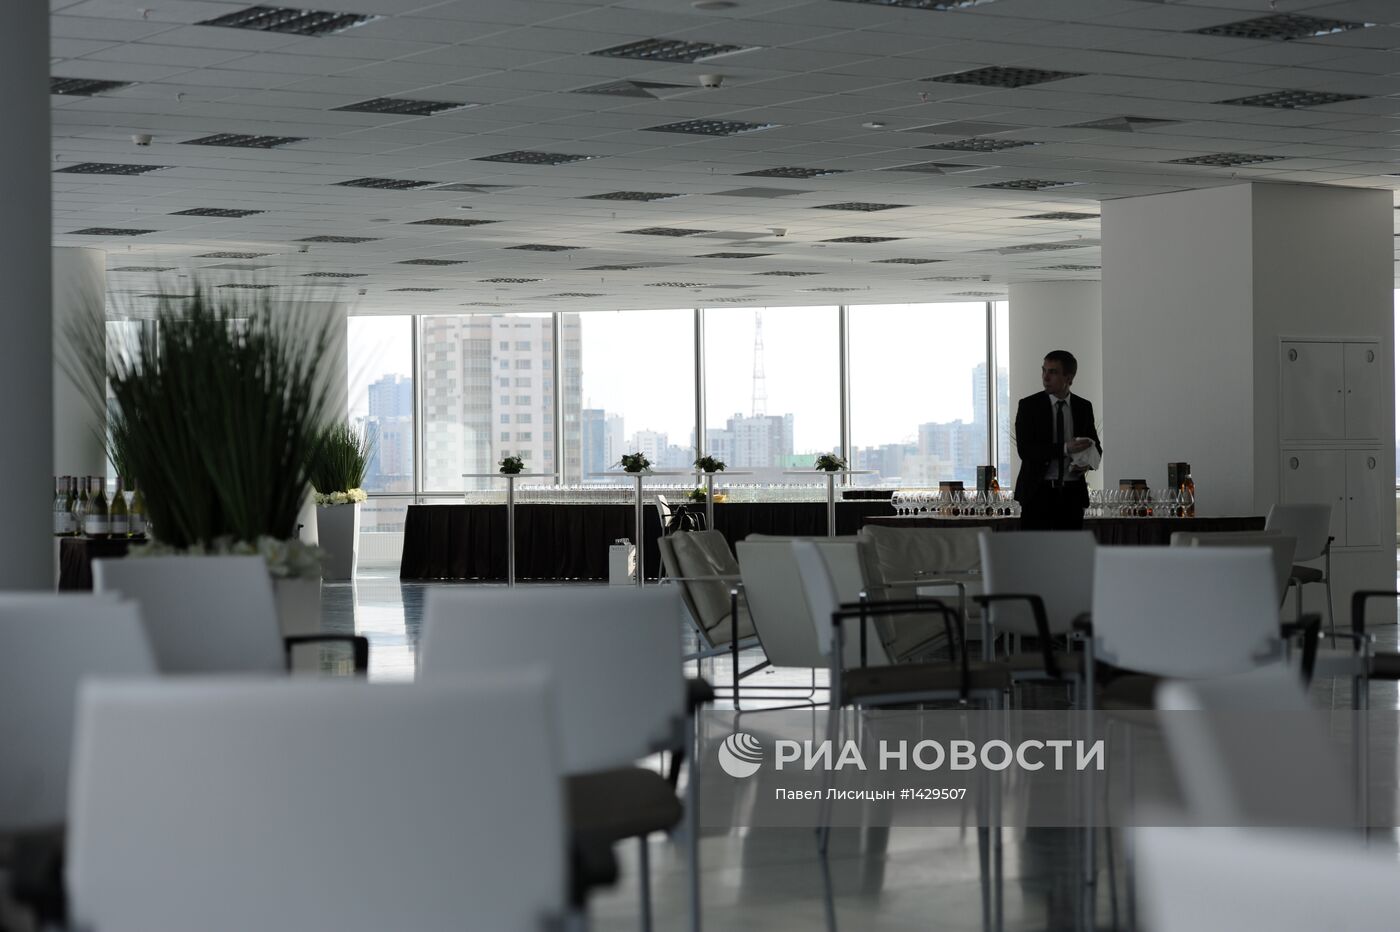 Бизнес-центр "Президент" в Екатеринбурге